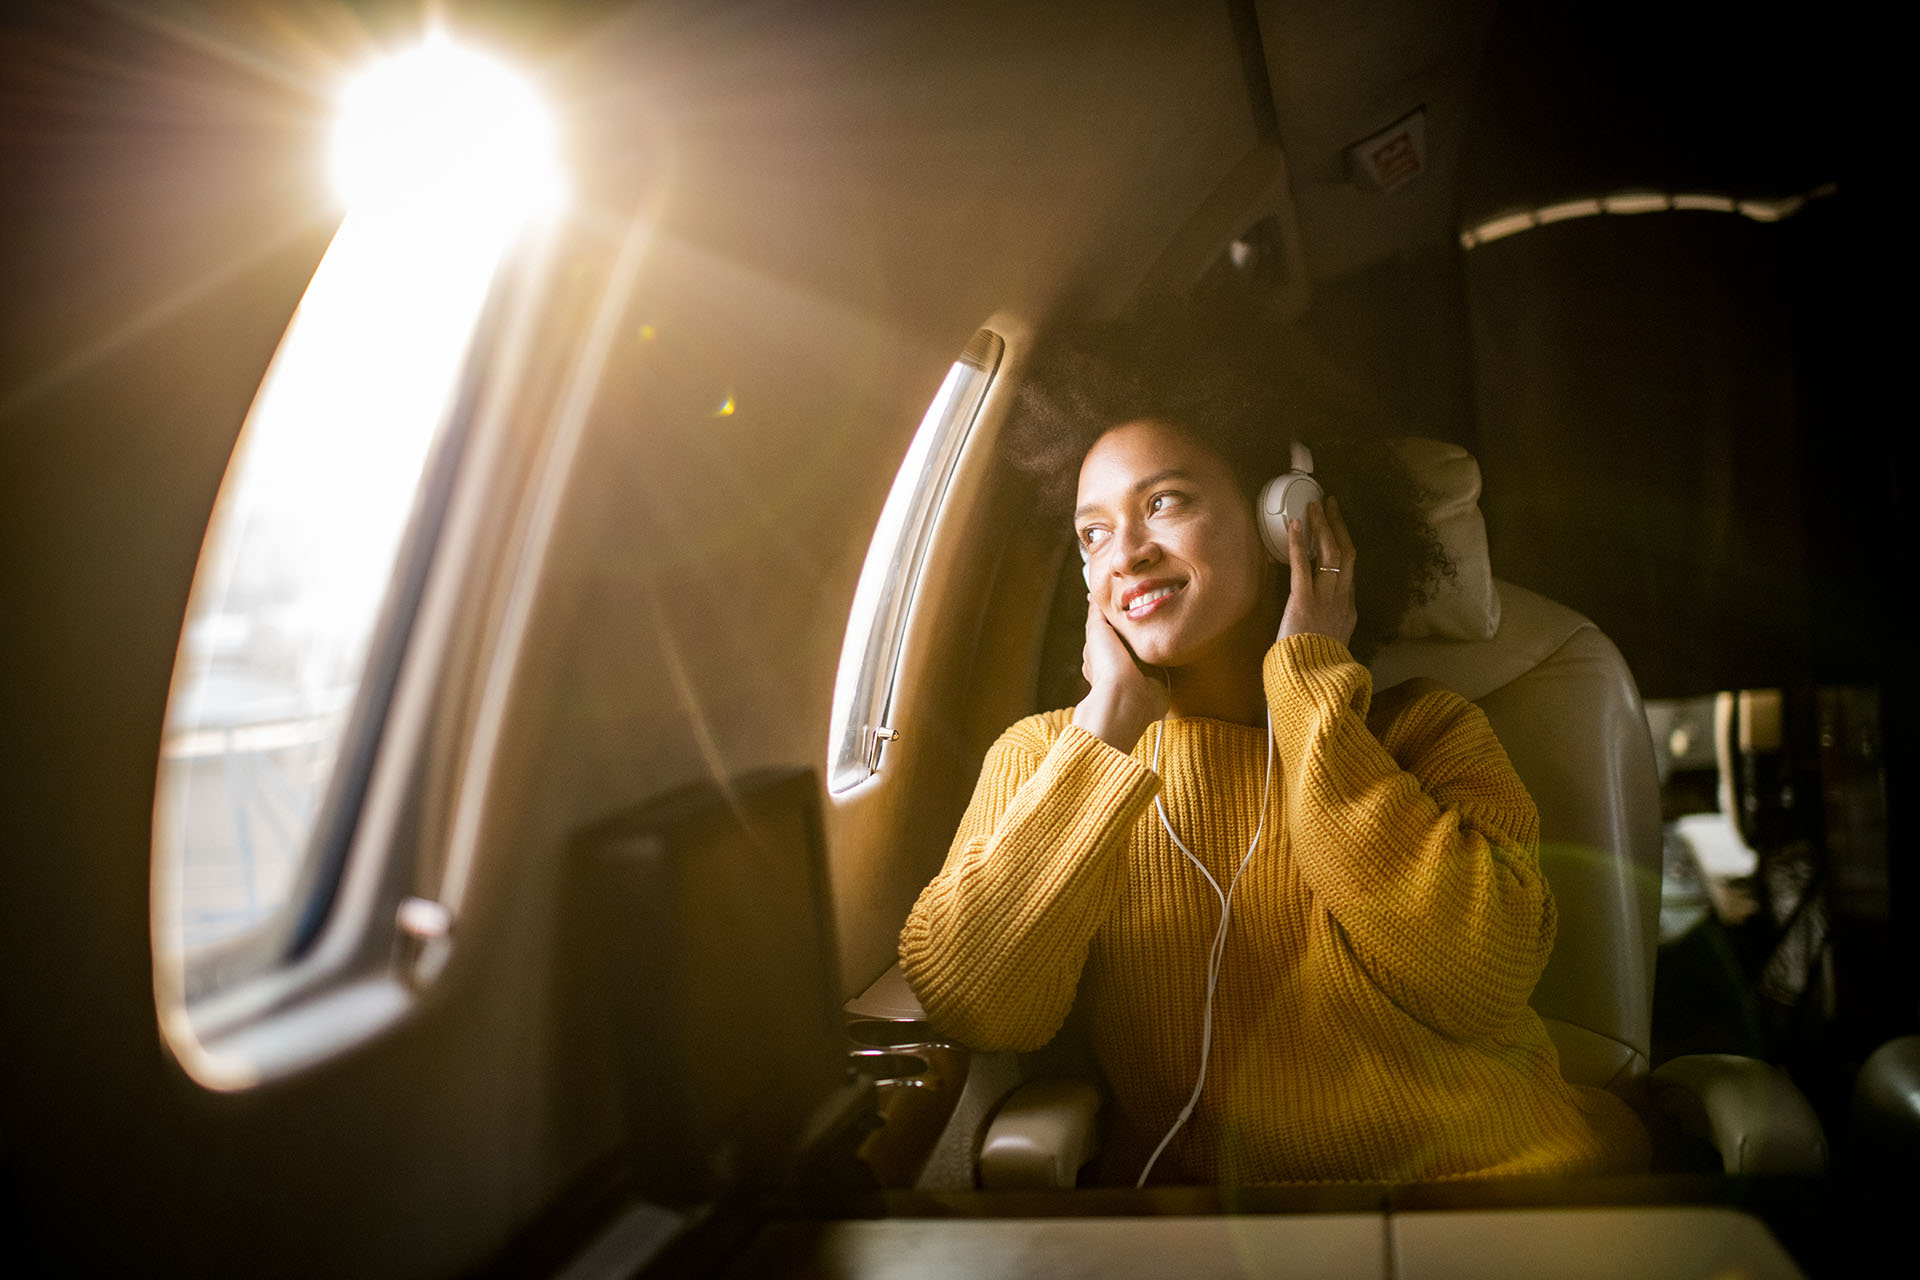 Woman sitting on plane listening to music through headphones